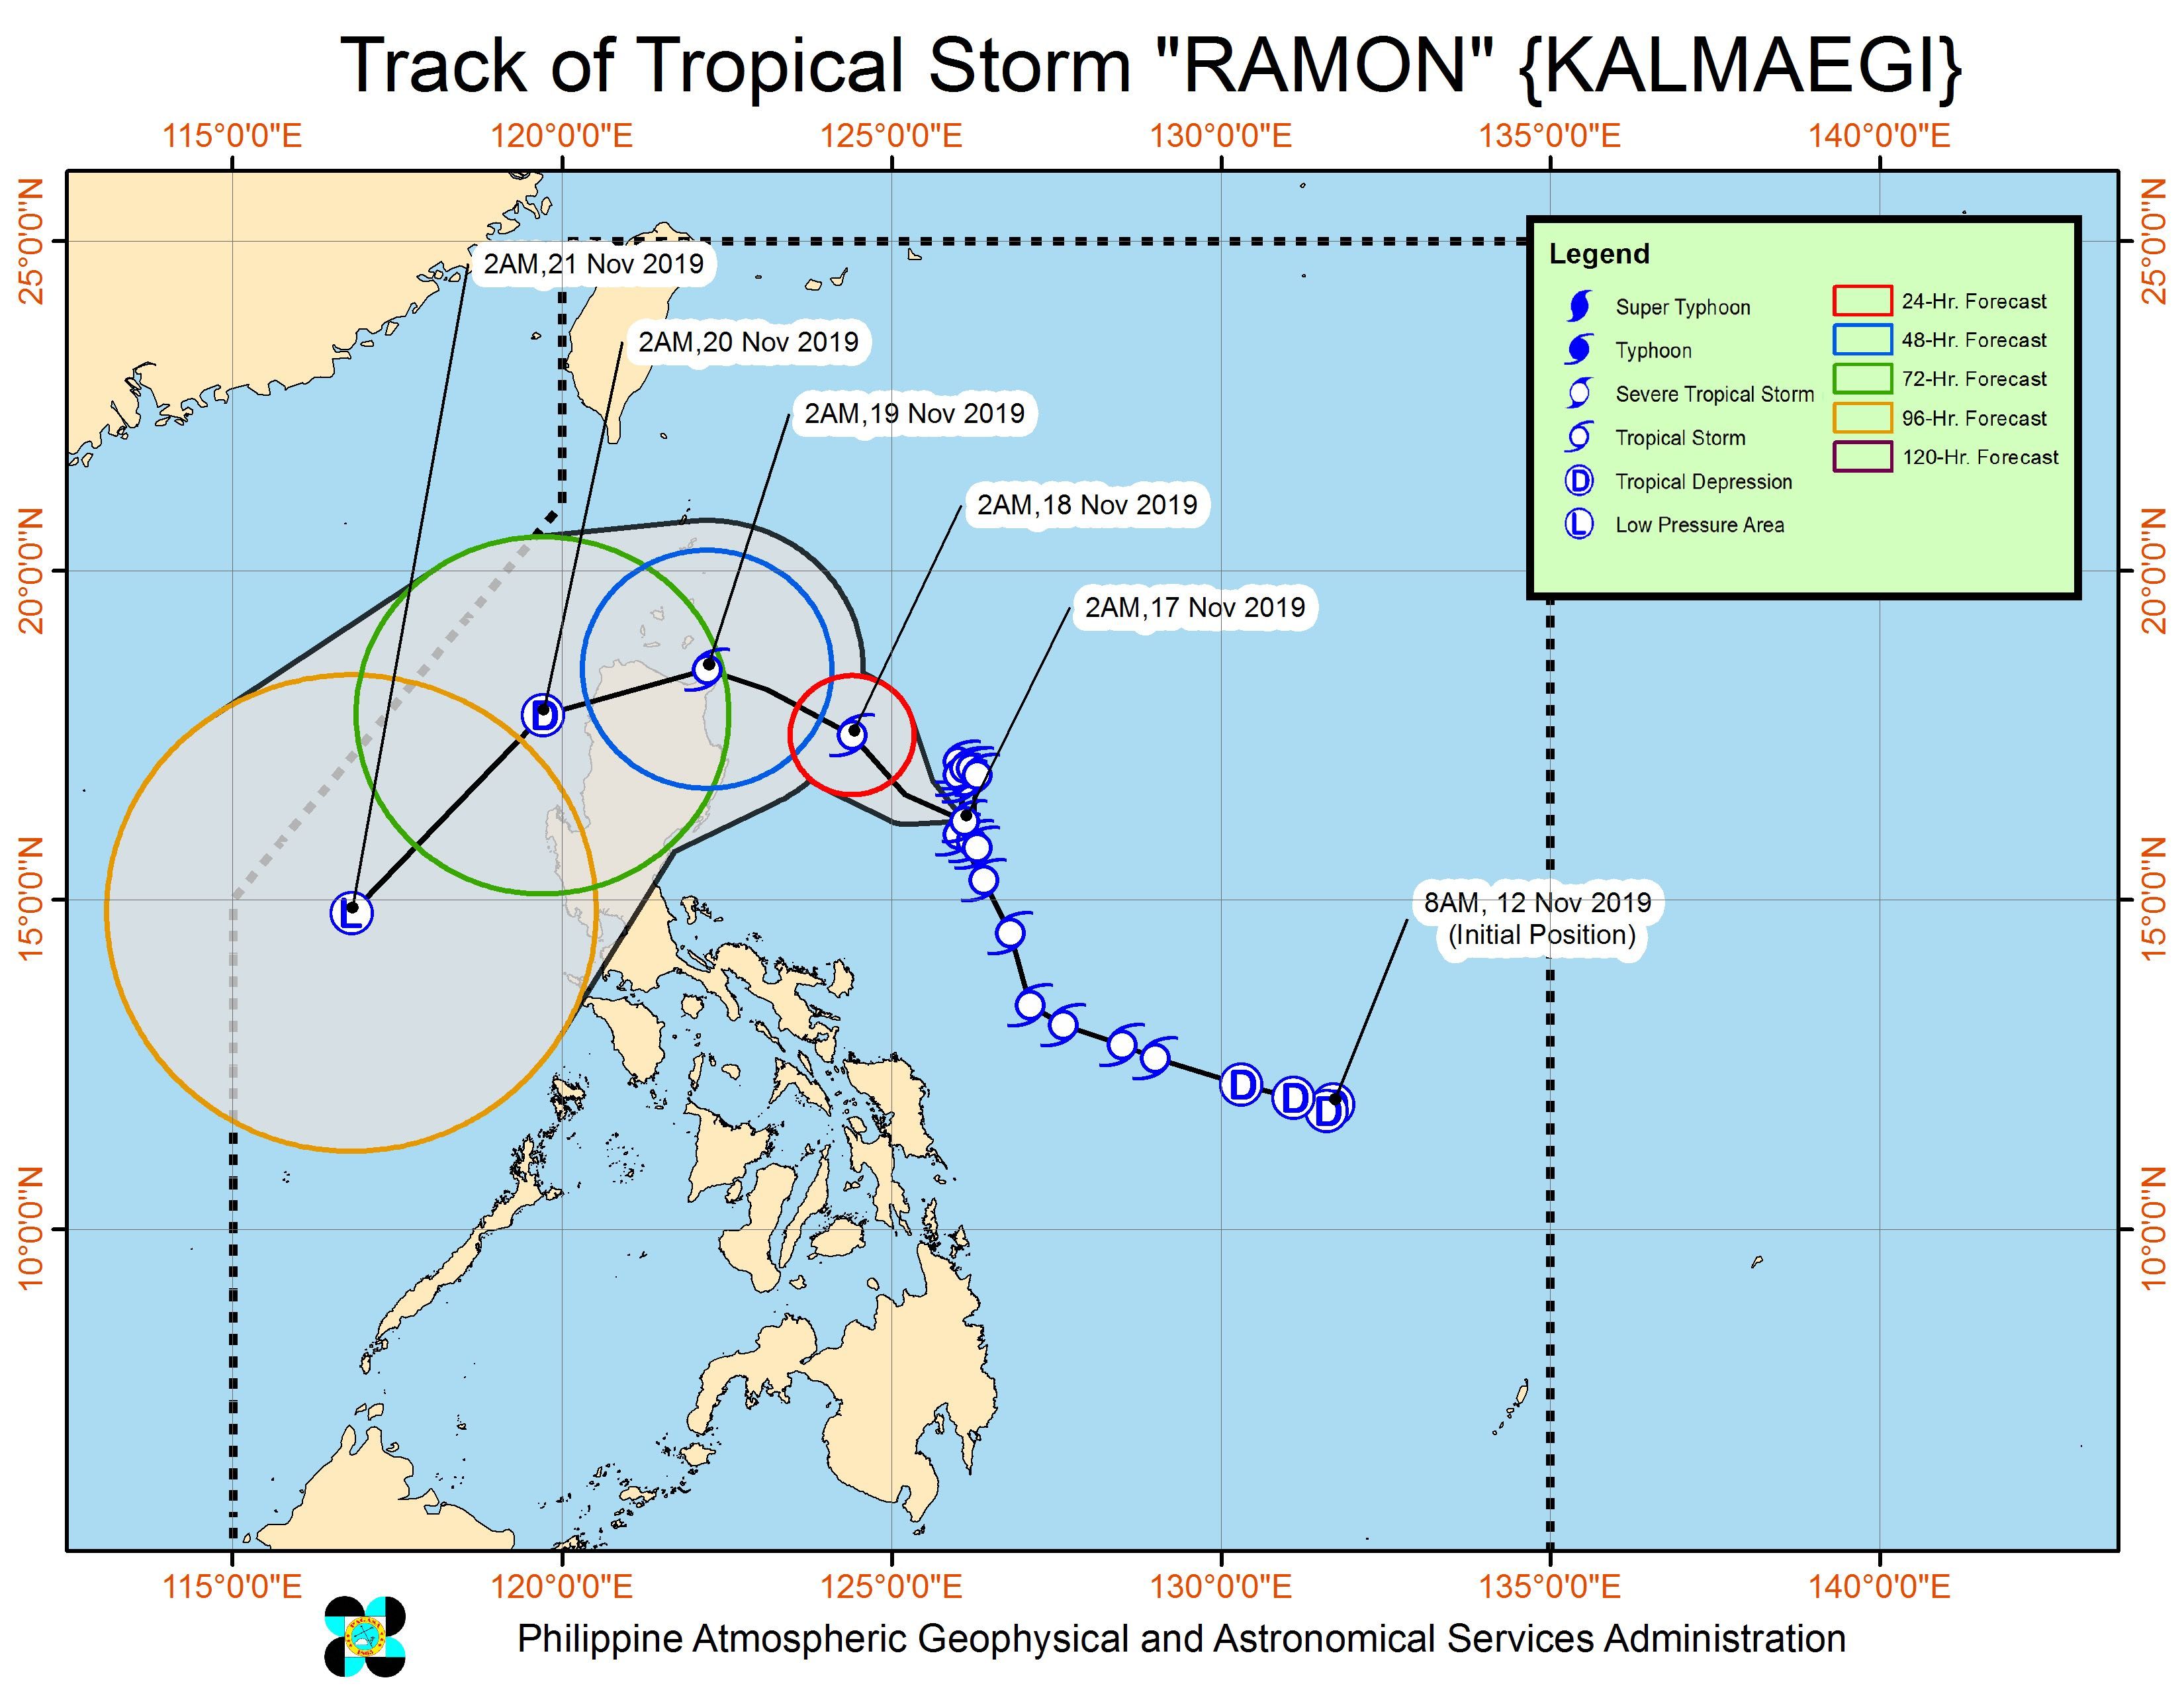 Forecast track of Tropical Storm Ramon (Kalmaegi) as of November 17, 2019, 5 am. Image from PAGASA 